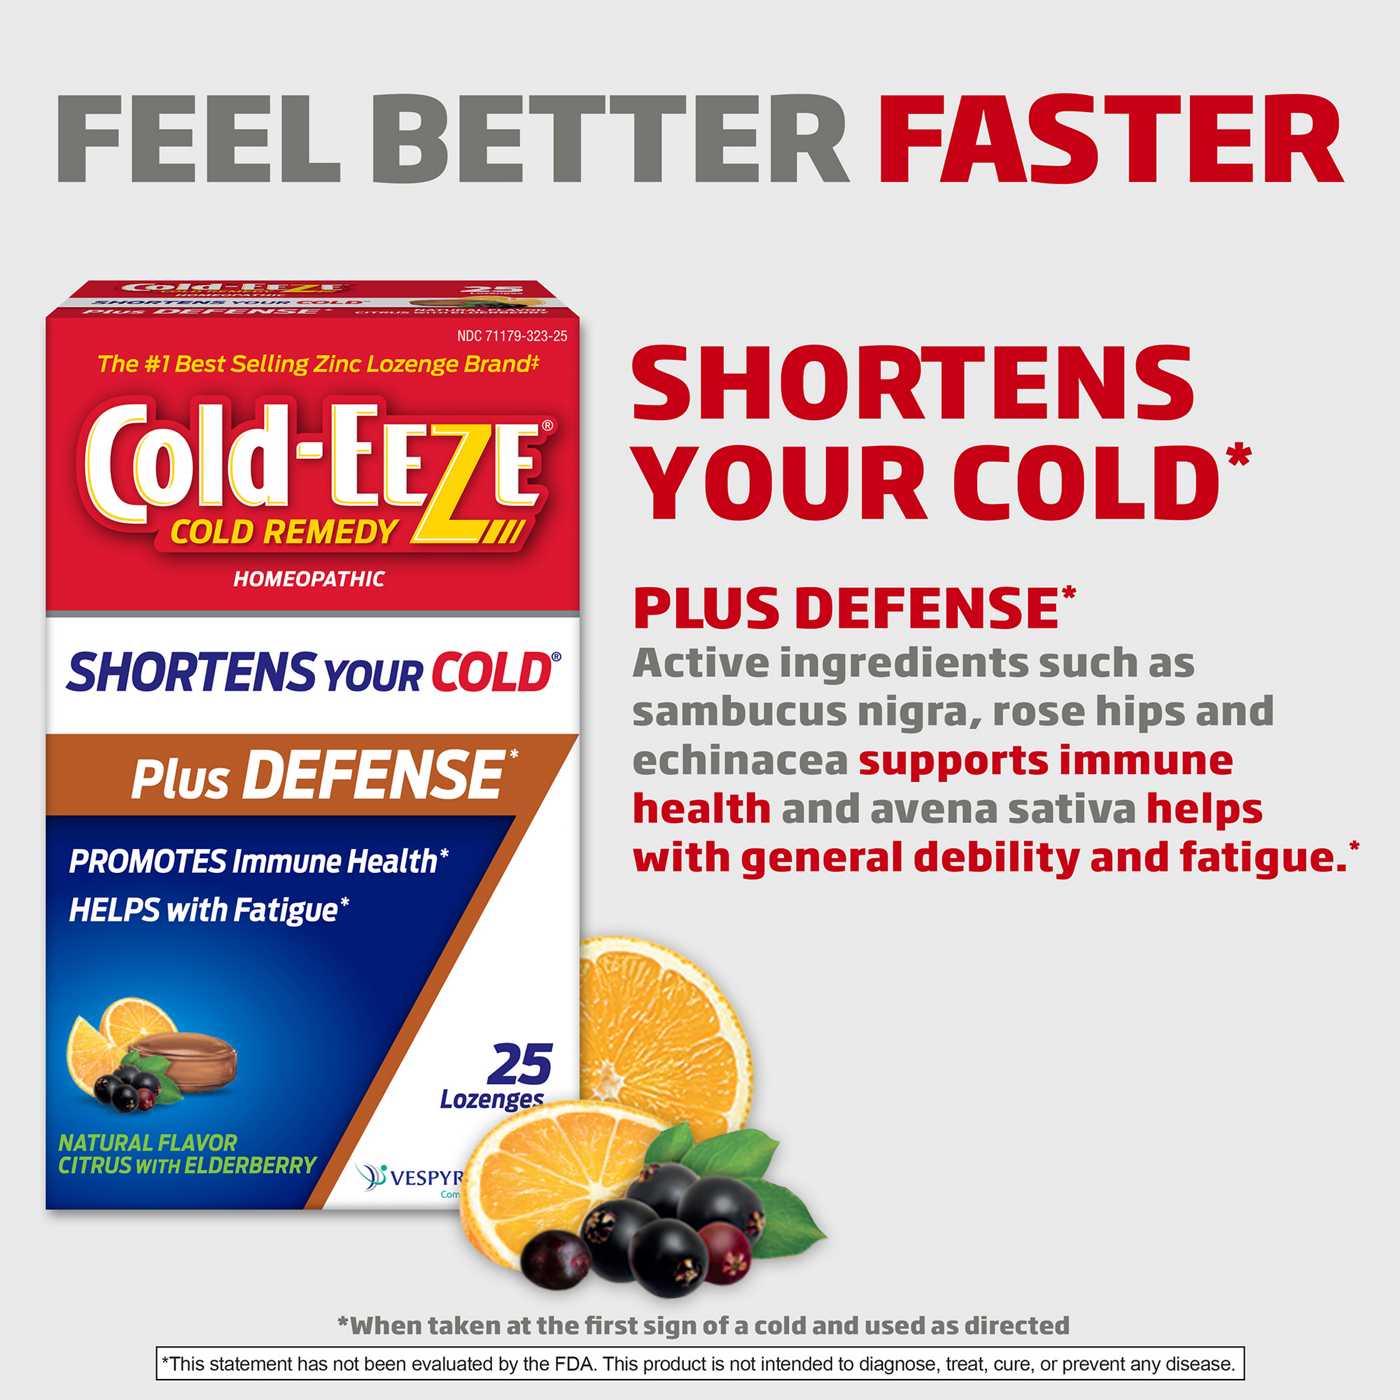 Cold-EEZE Cold Remedy Zinc Lozenges - Natural Citrus with Elderberry; image 4 of 7